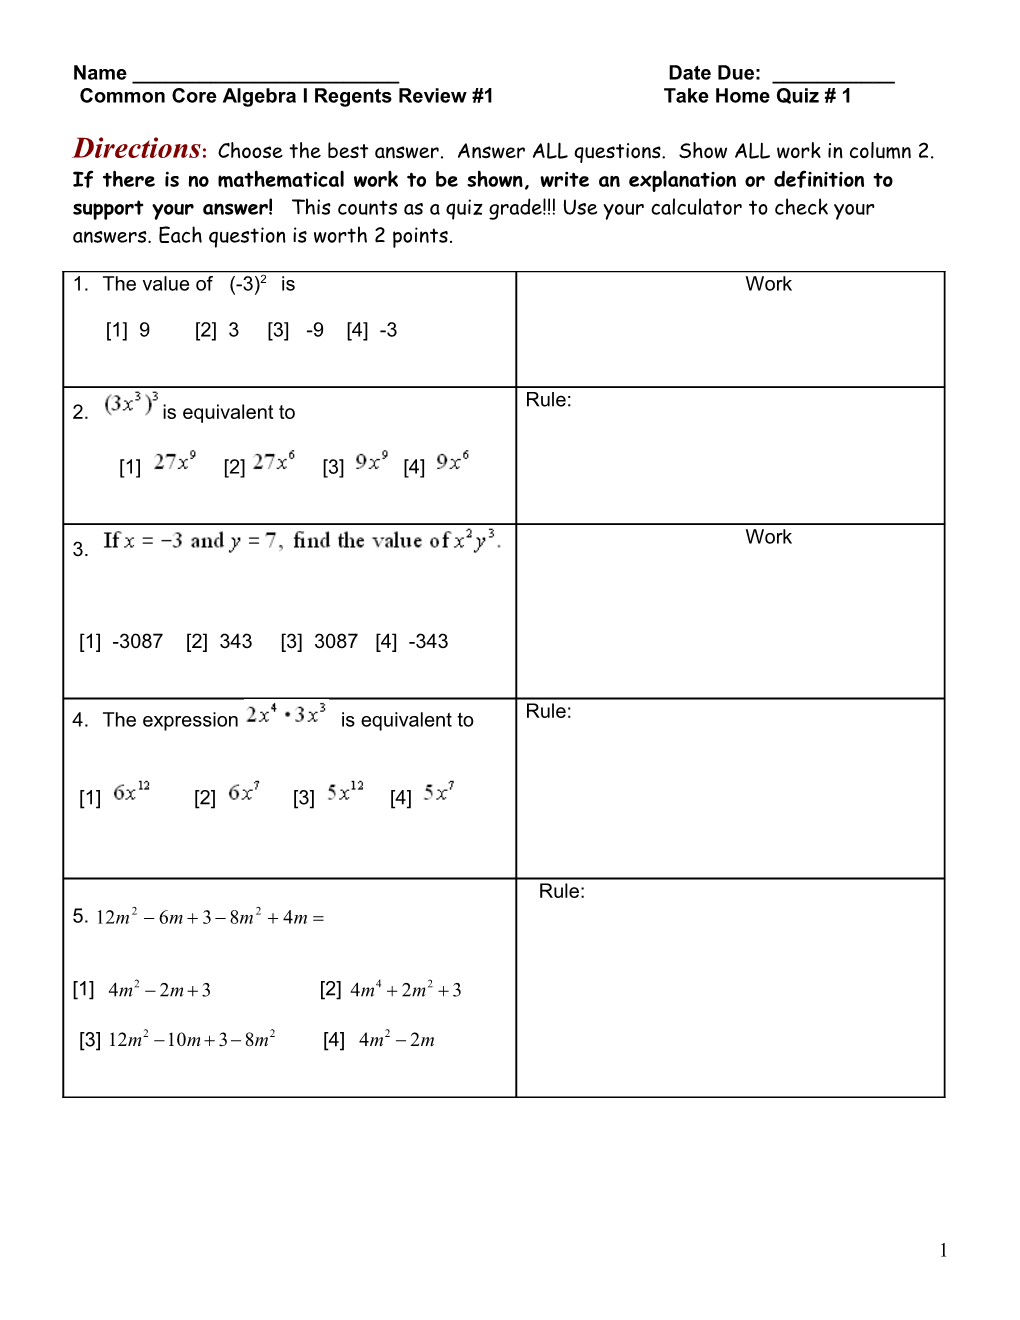 Common Core Algebra I Regents Review #1 Take Home Quiz # 1